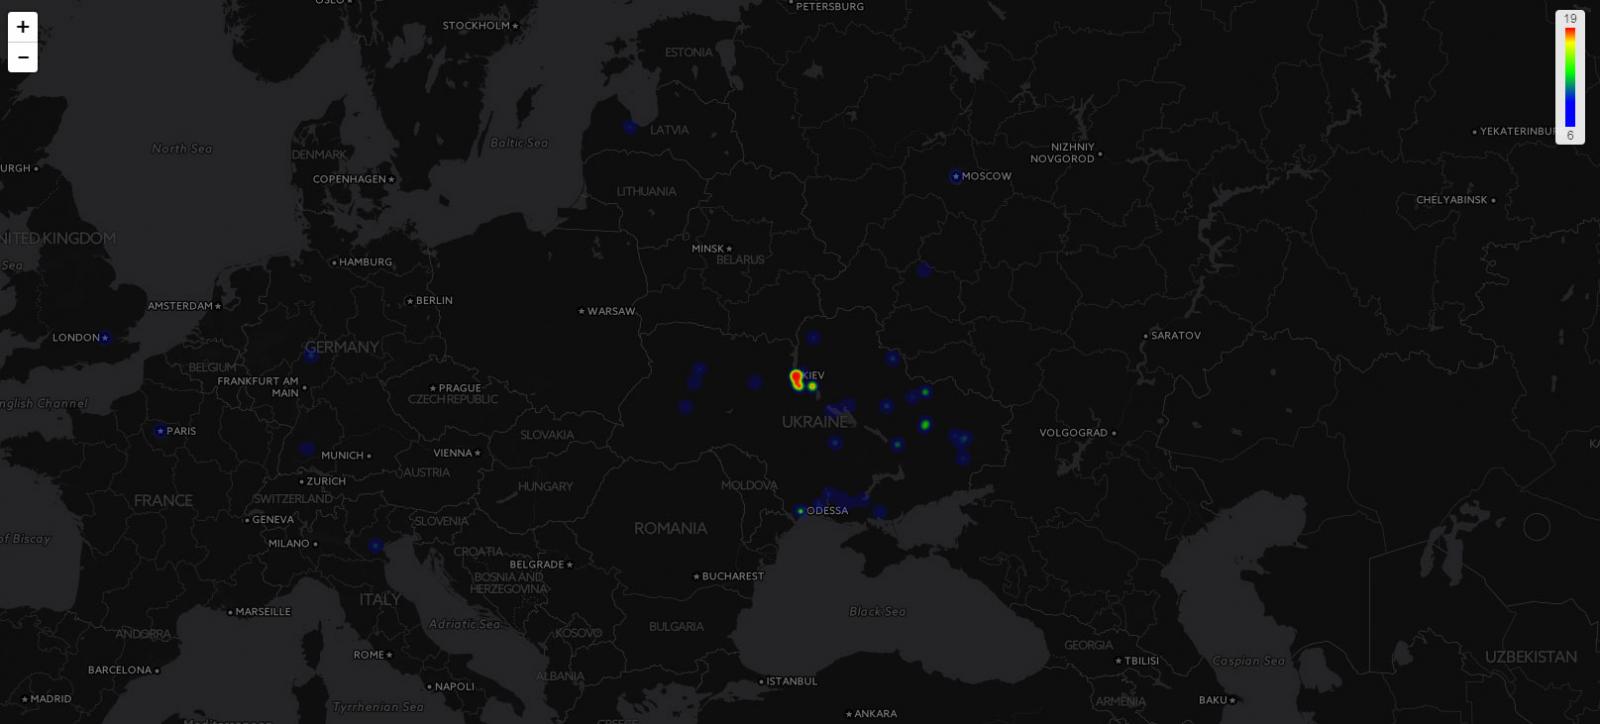 Zoomed Map of Ukraine Region